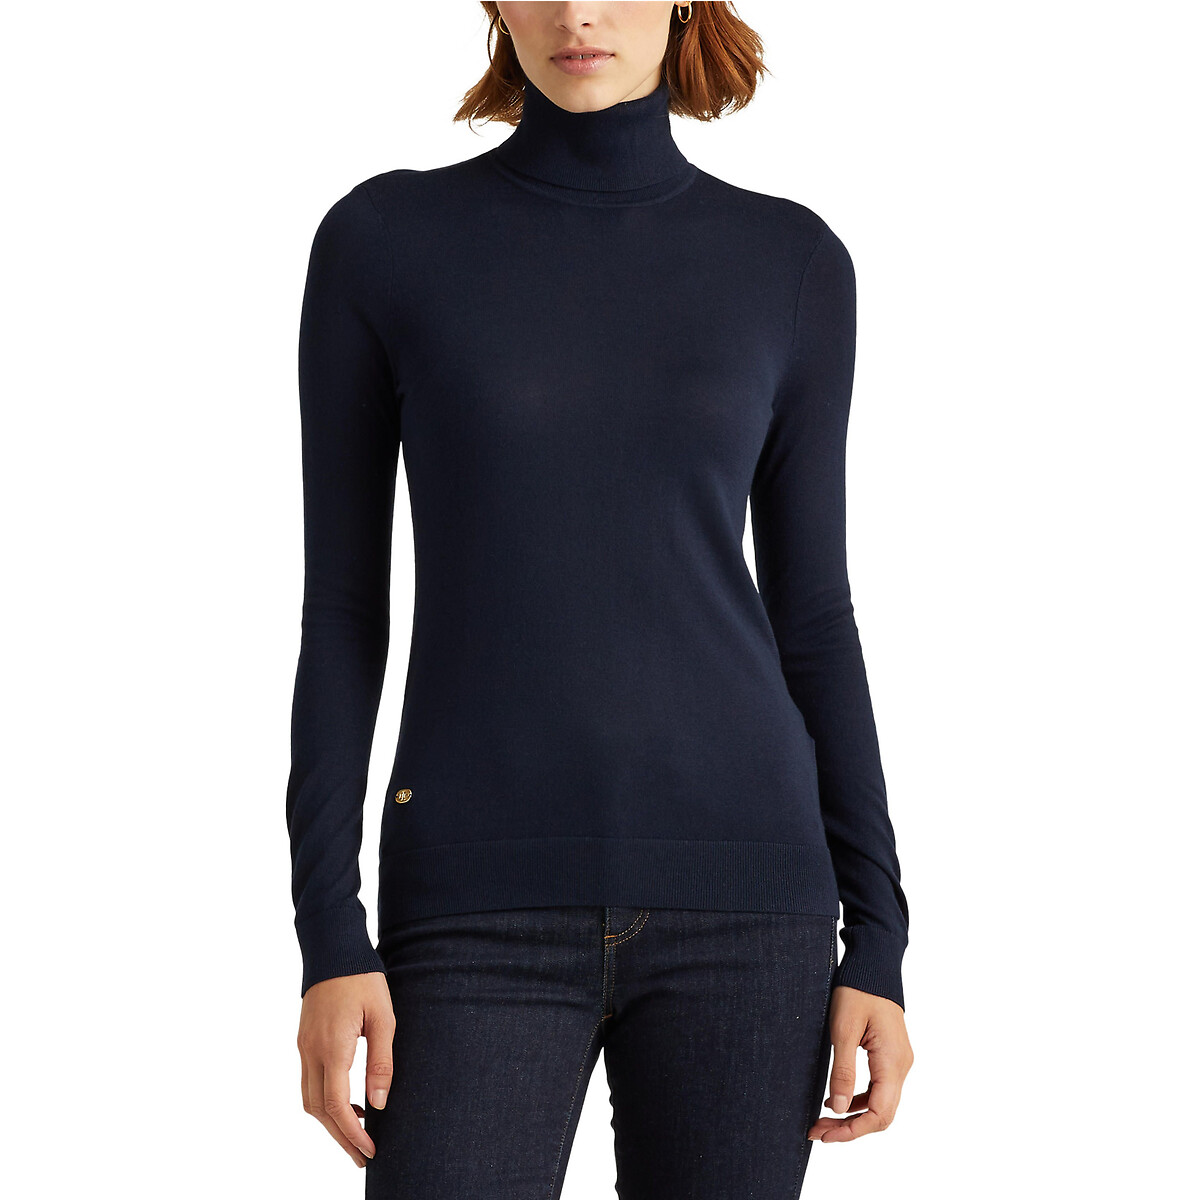 Пуловер ZOE с высоким воротником из тонкого трикотажа XS синий пуловер в полоску из тонкого трикотажа xs белый